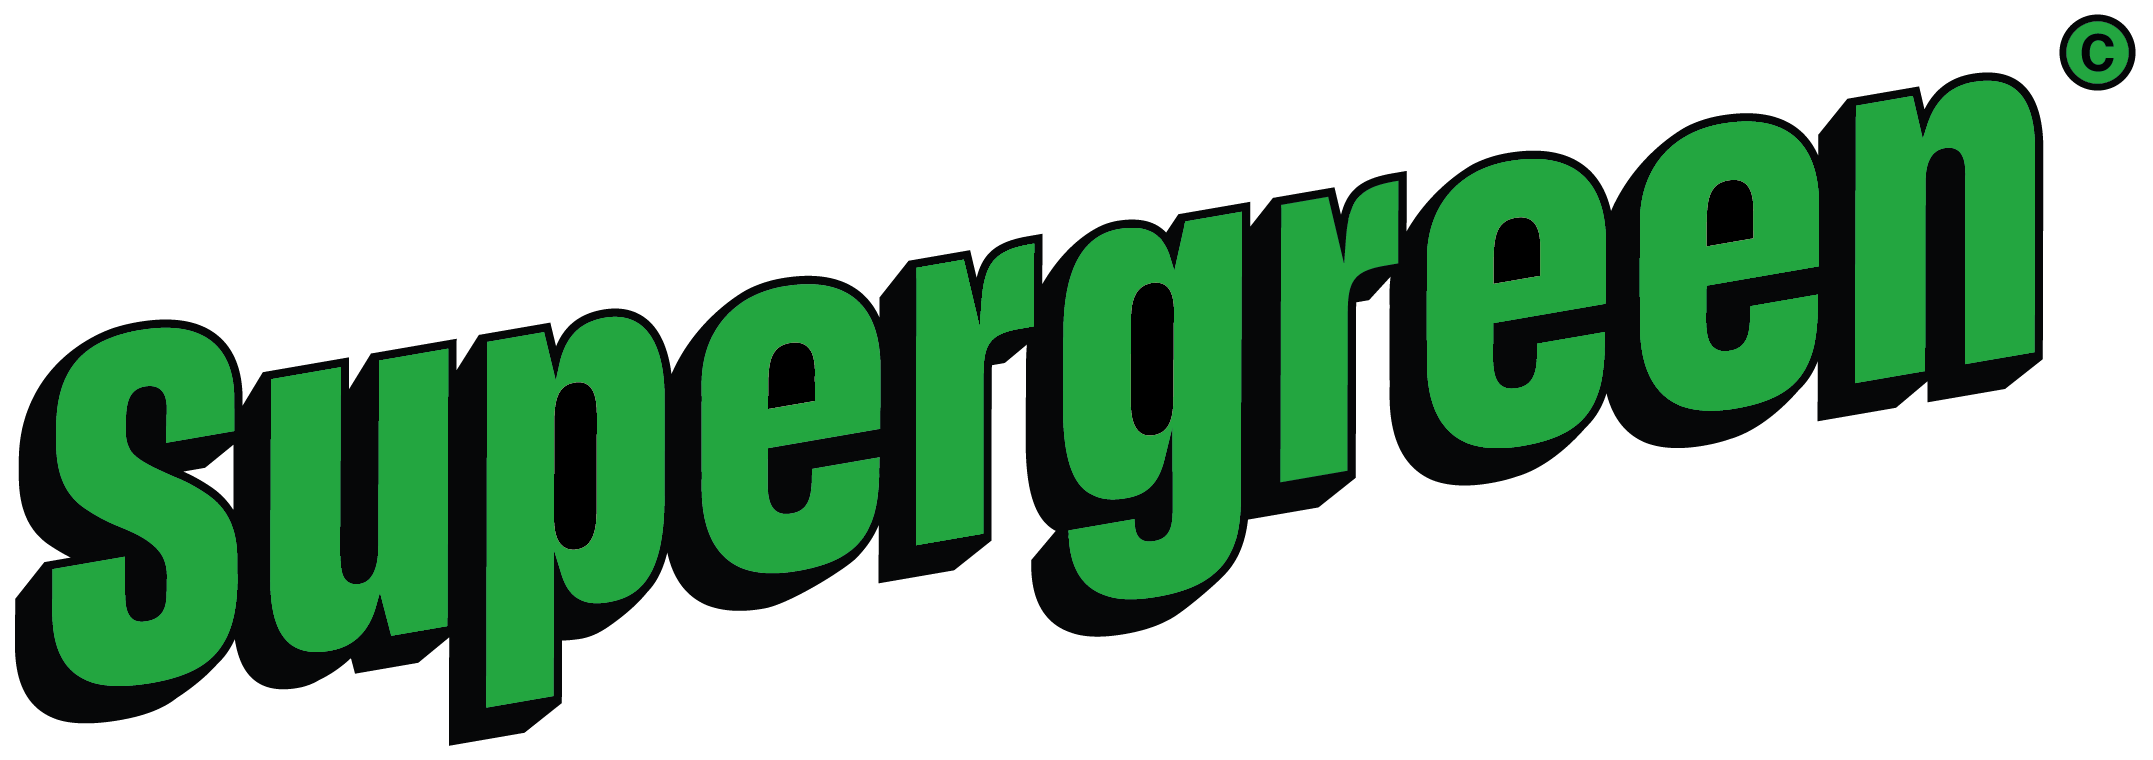 Supergreen_logo